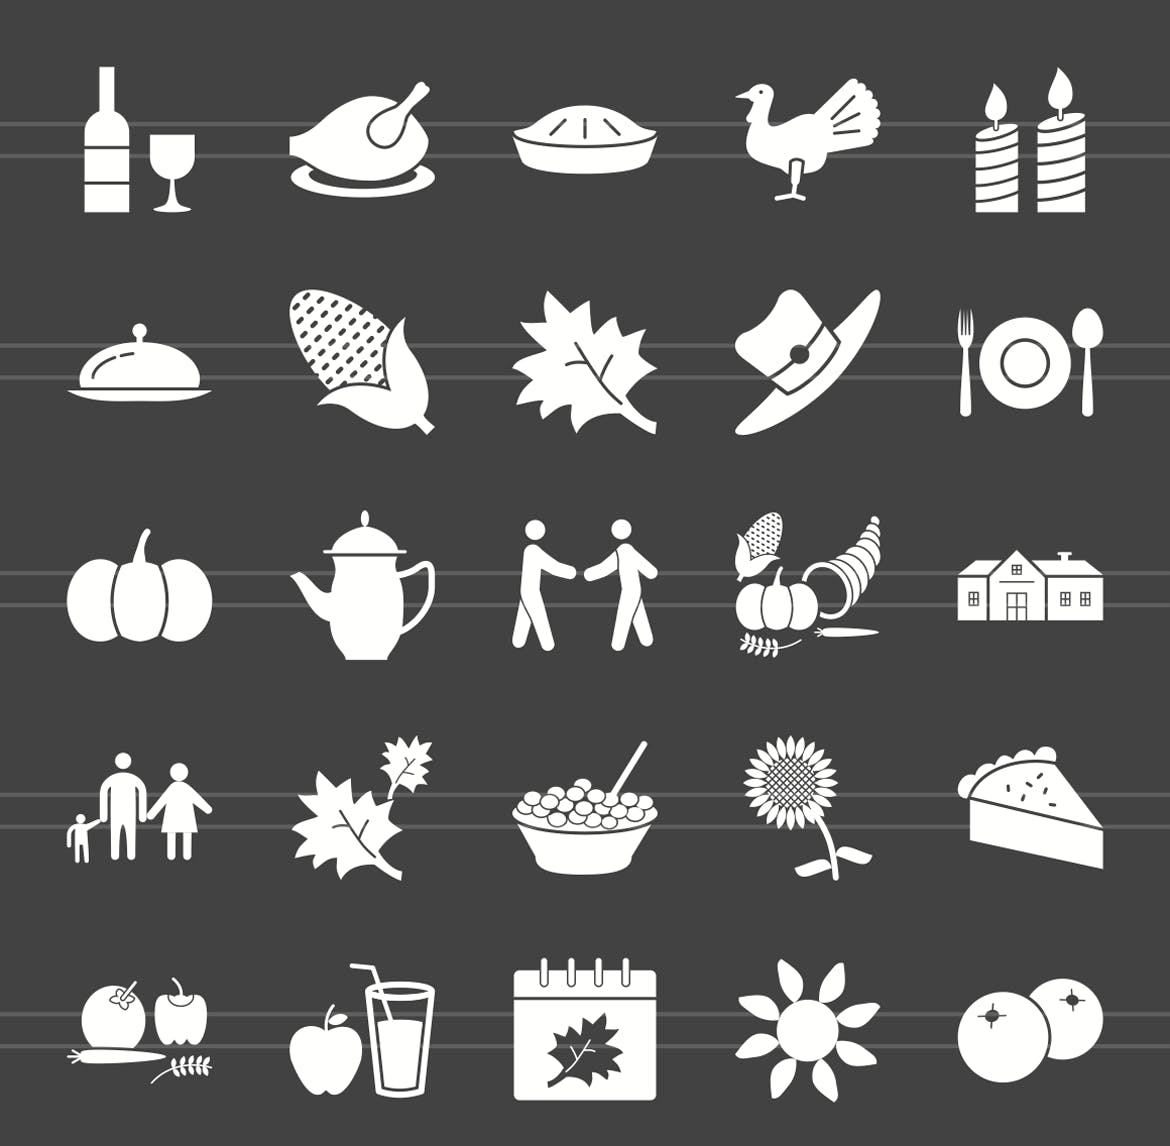 50个感恩节字形反转矢量图标素材 50 Thanksgiving Glyph Inverted Icons插图(1)